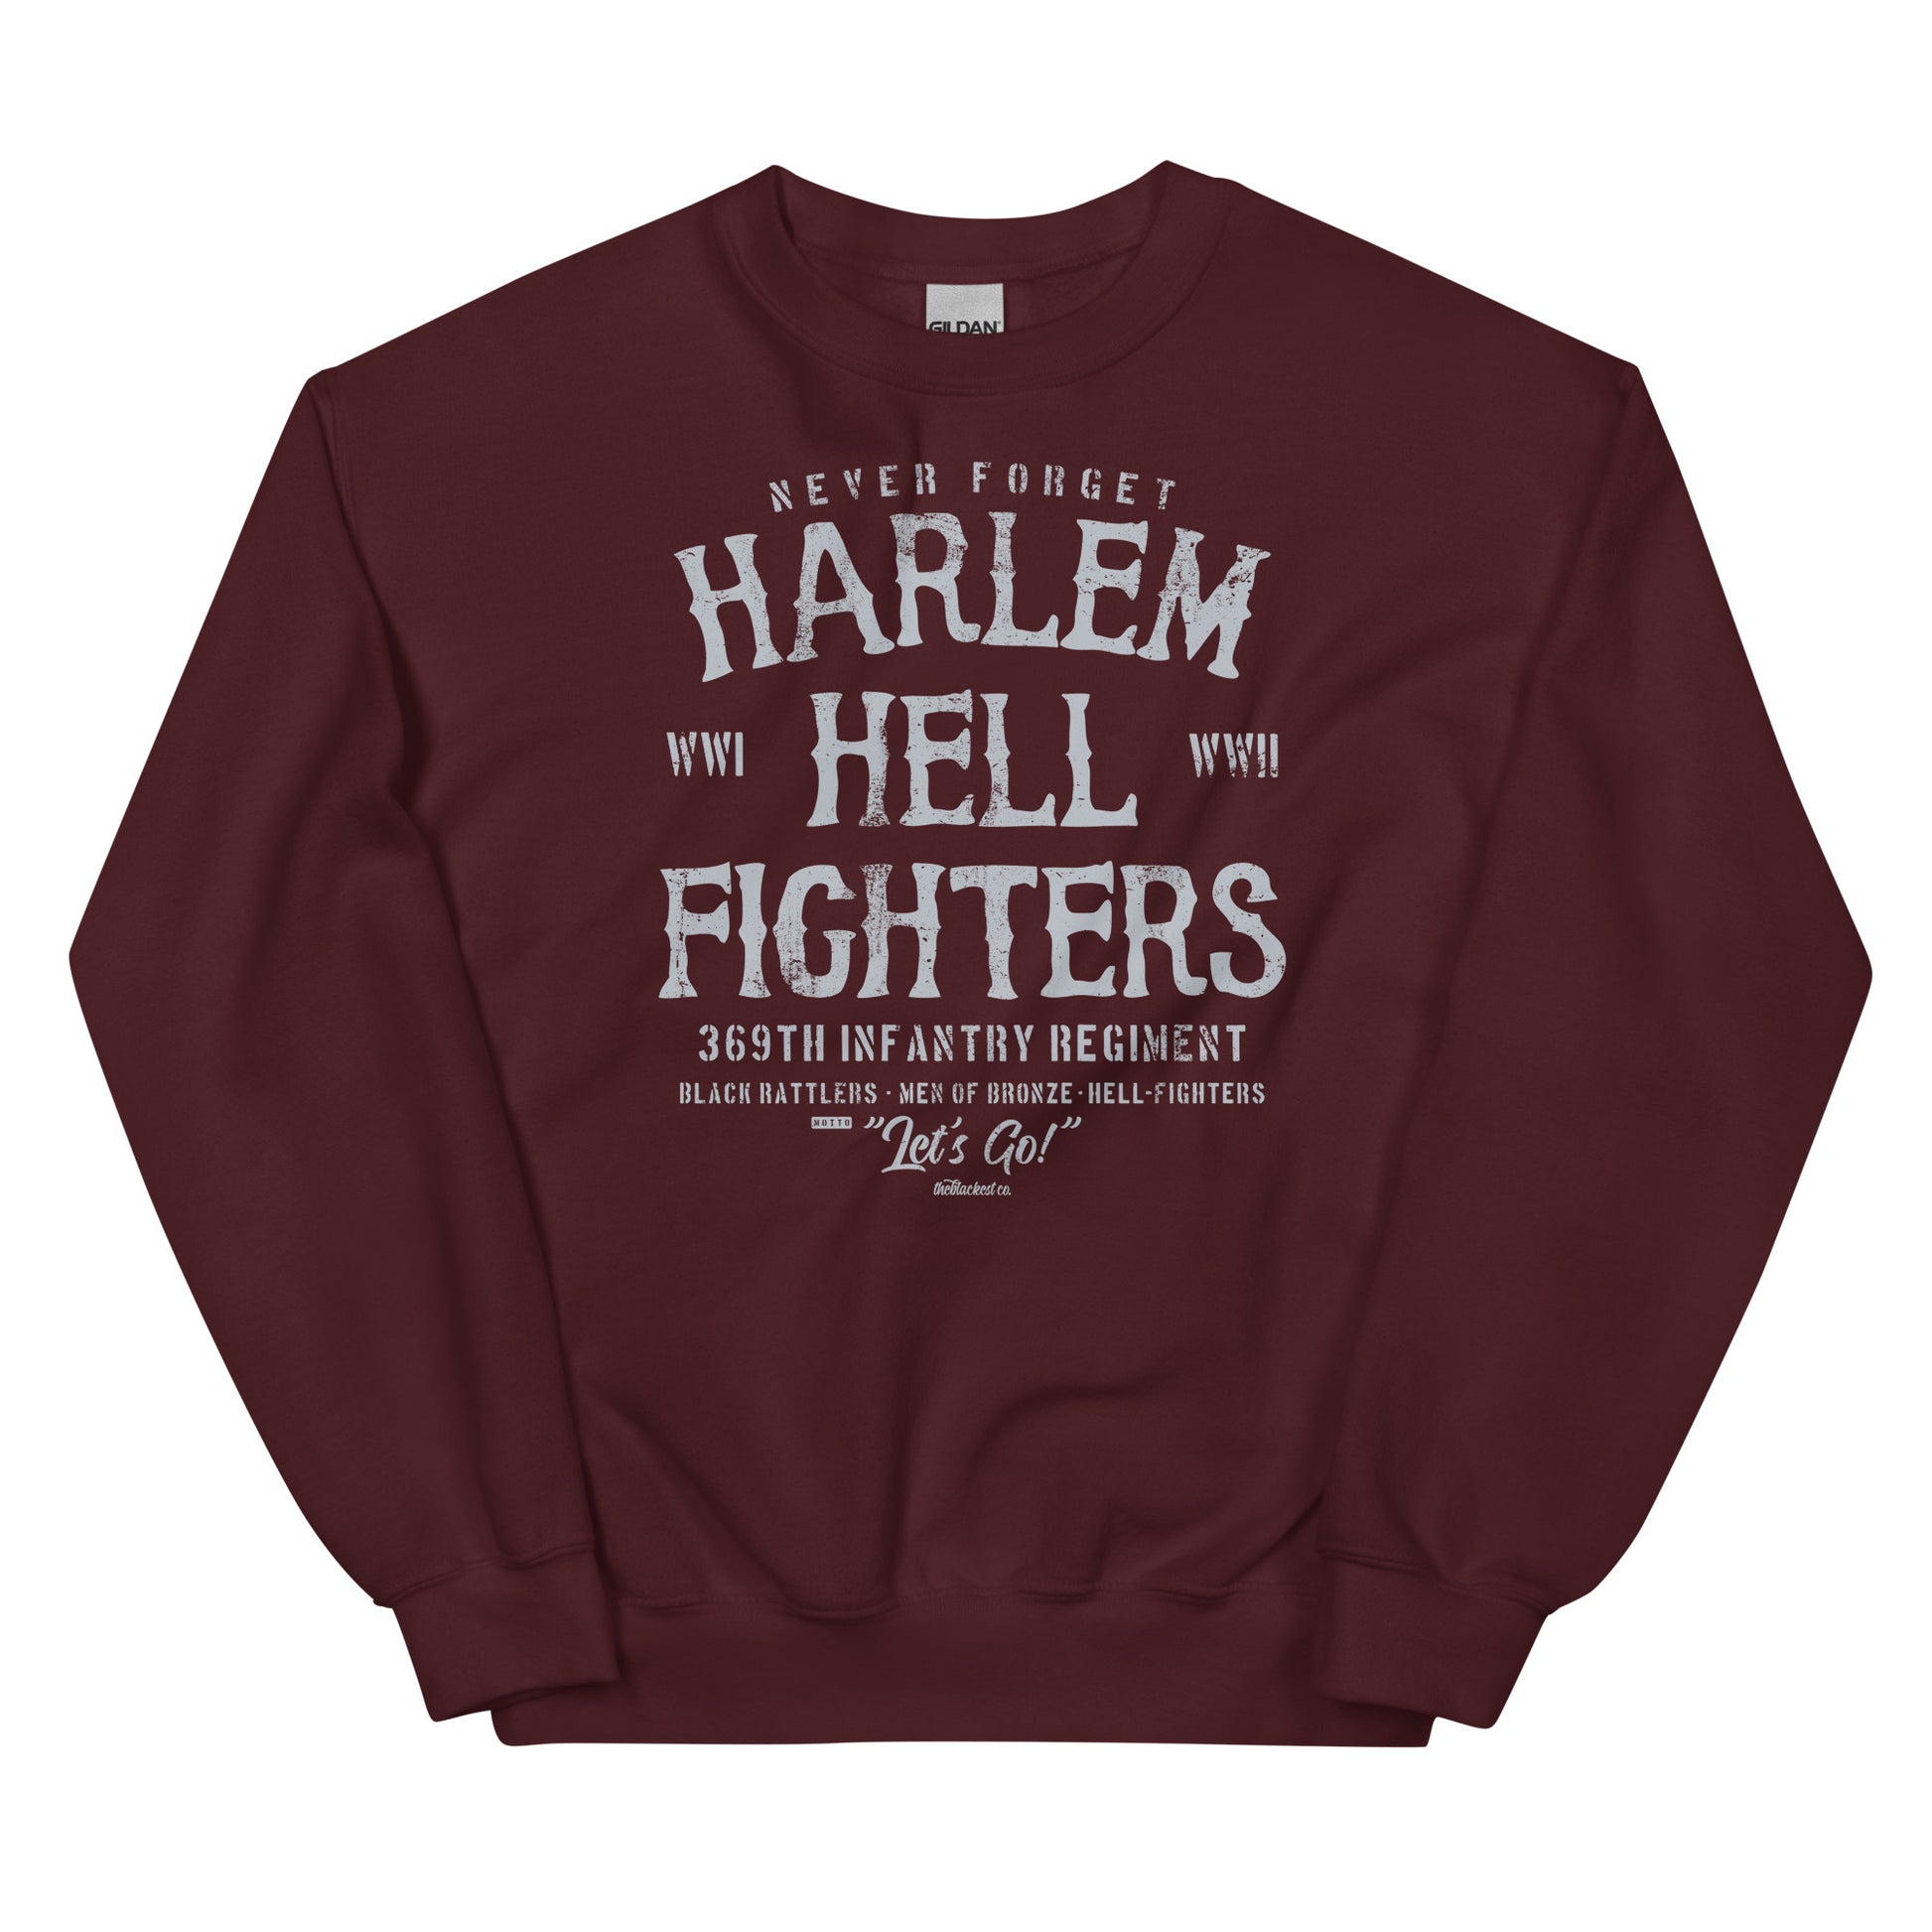 garnet sweatshirt with white text reading harlem hellfighters